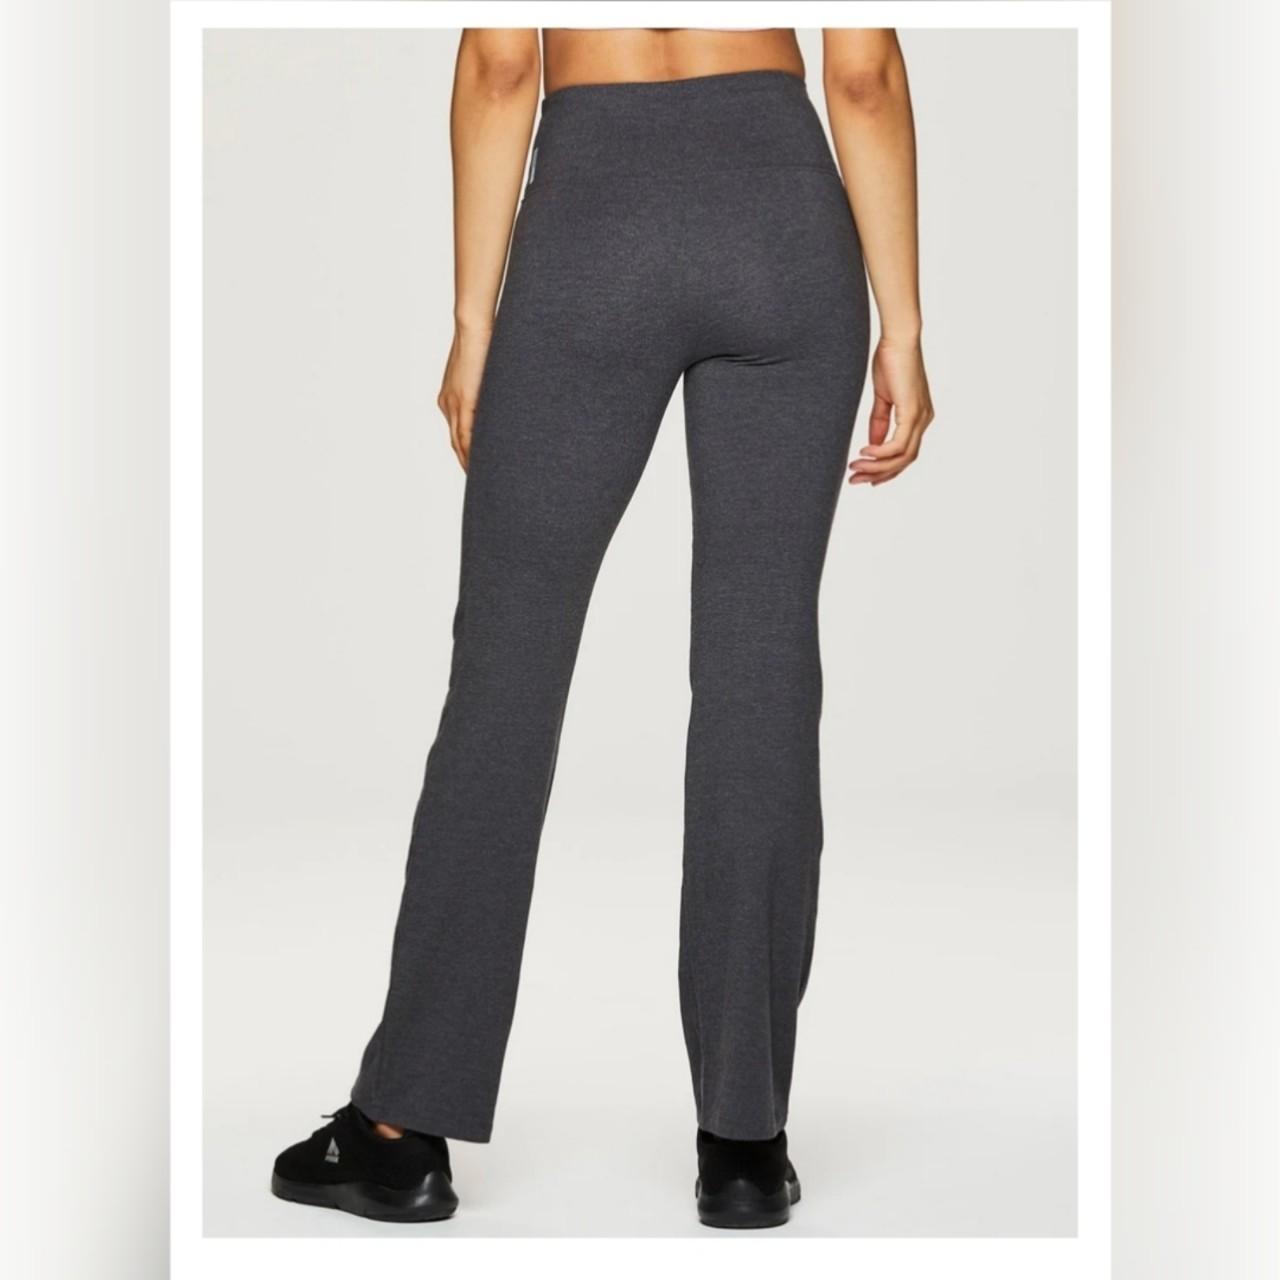 RBX activewear bootcut yoga pants / leggings. , New